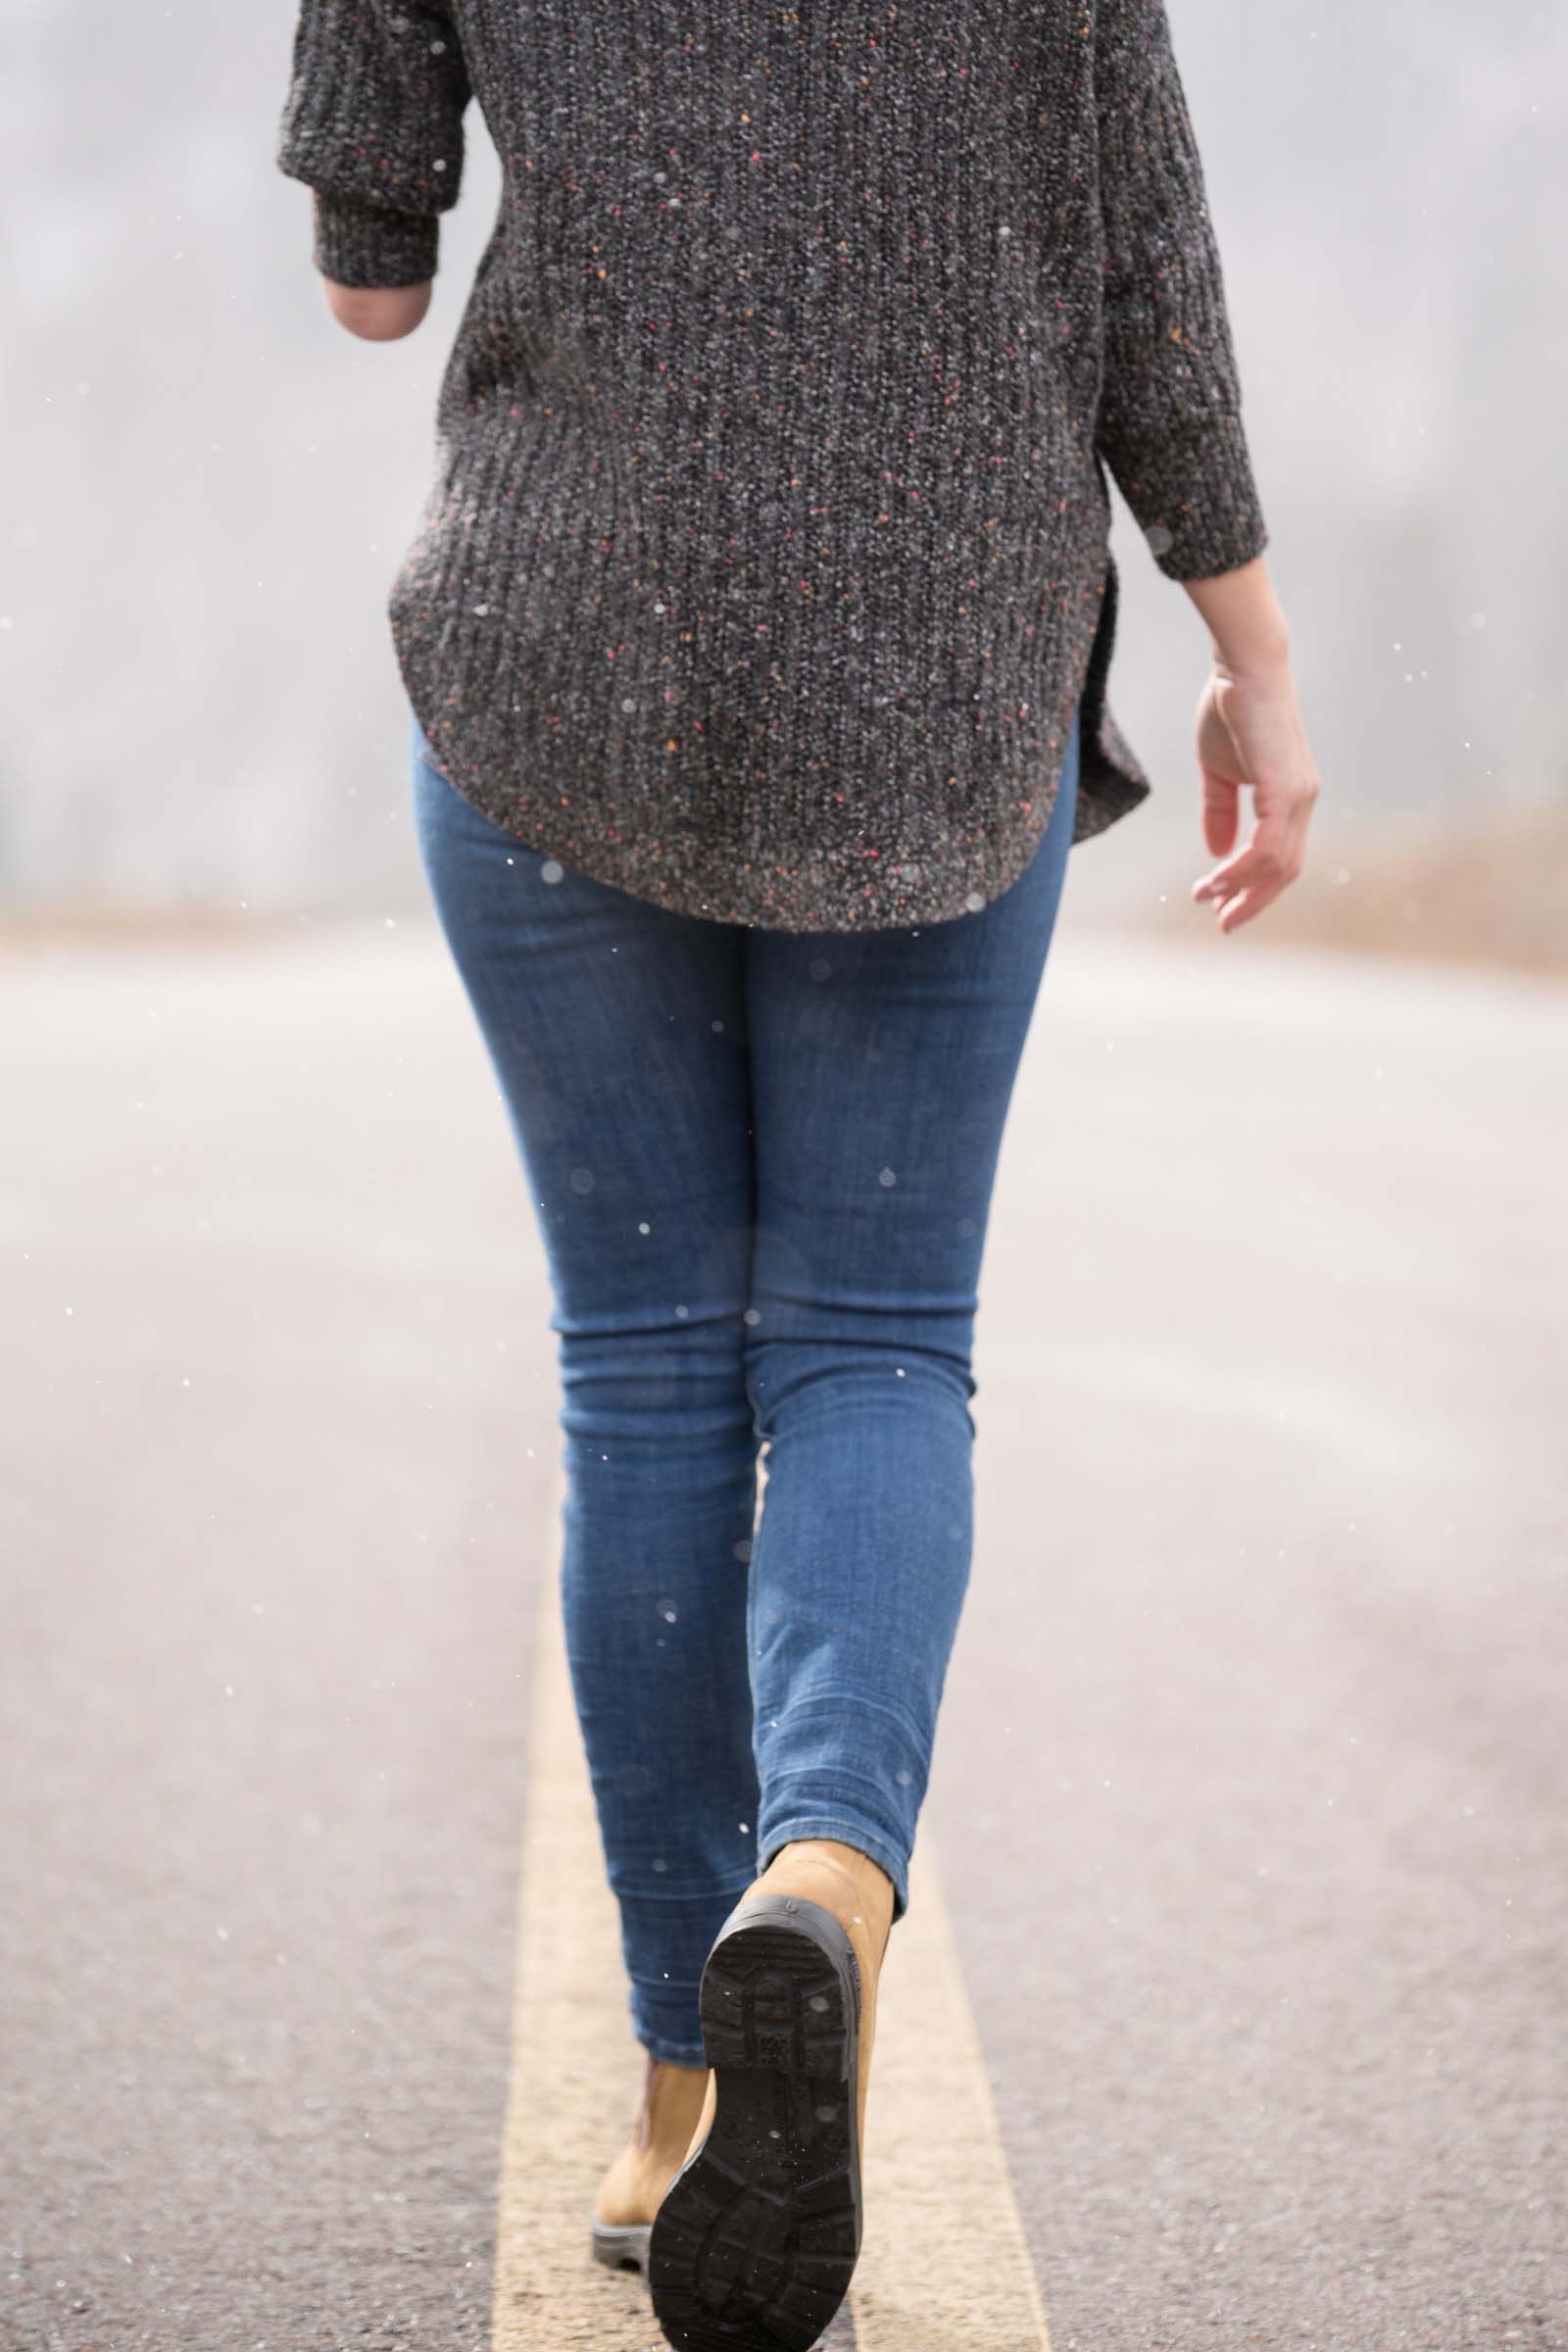 Sarah Herron walks down the road in her blundstone boots